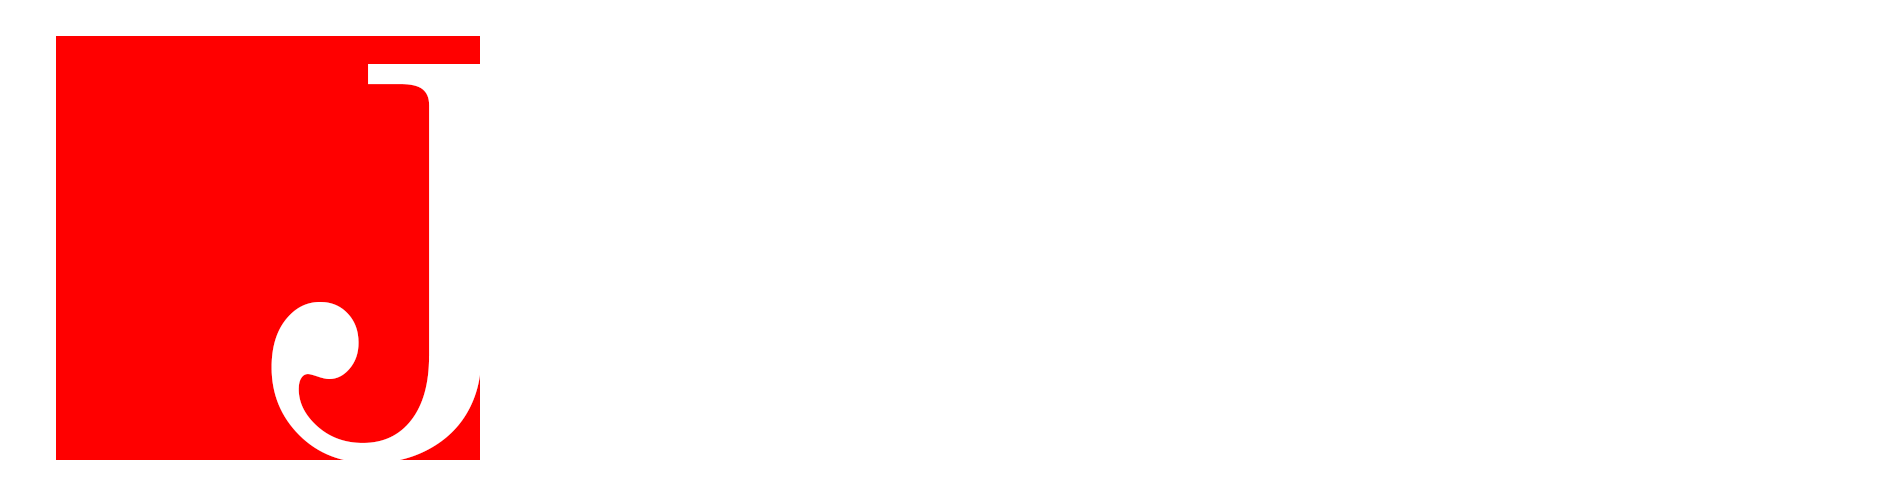 joonSquare-logo